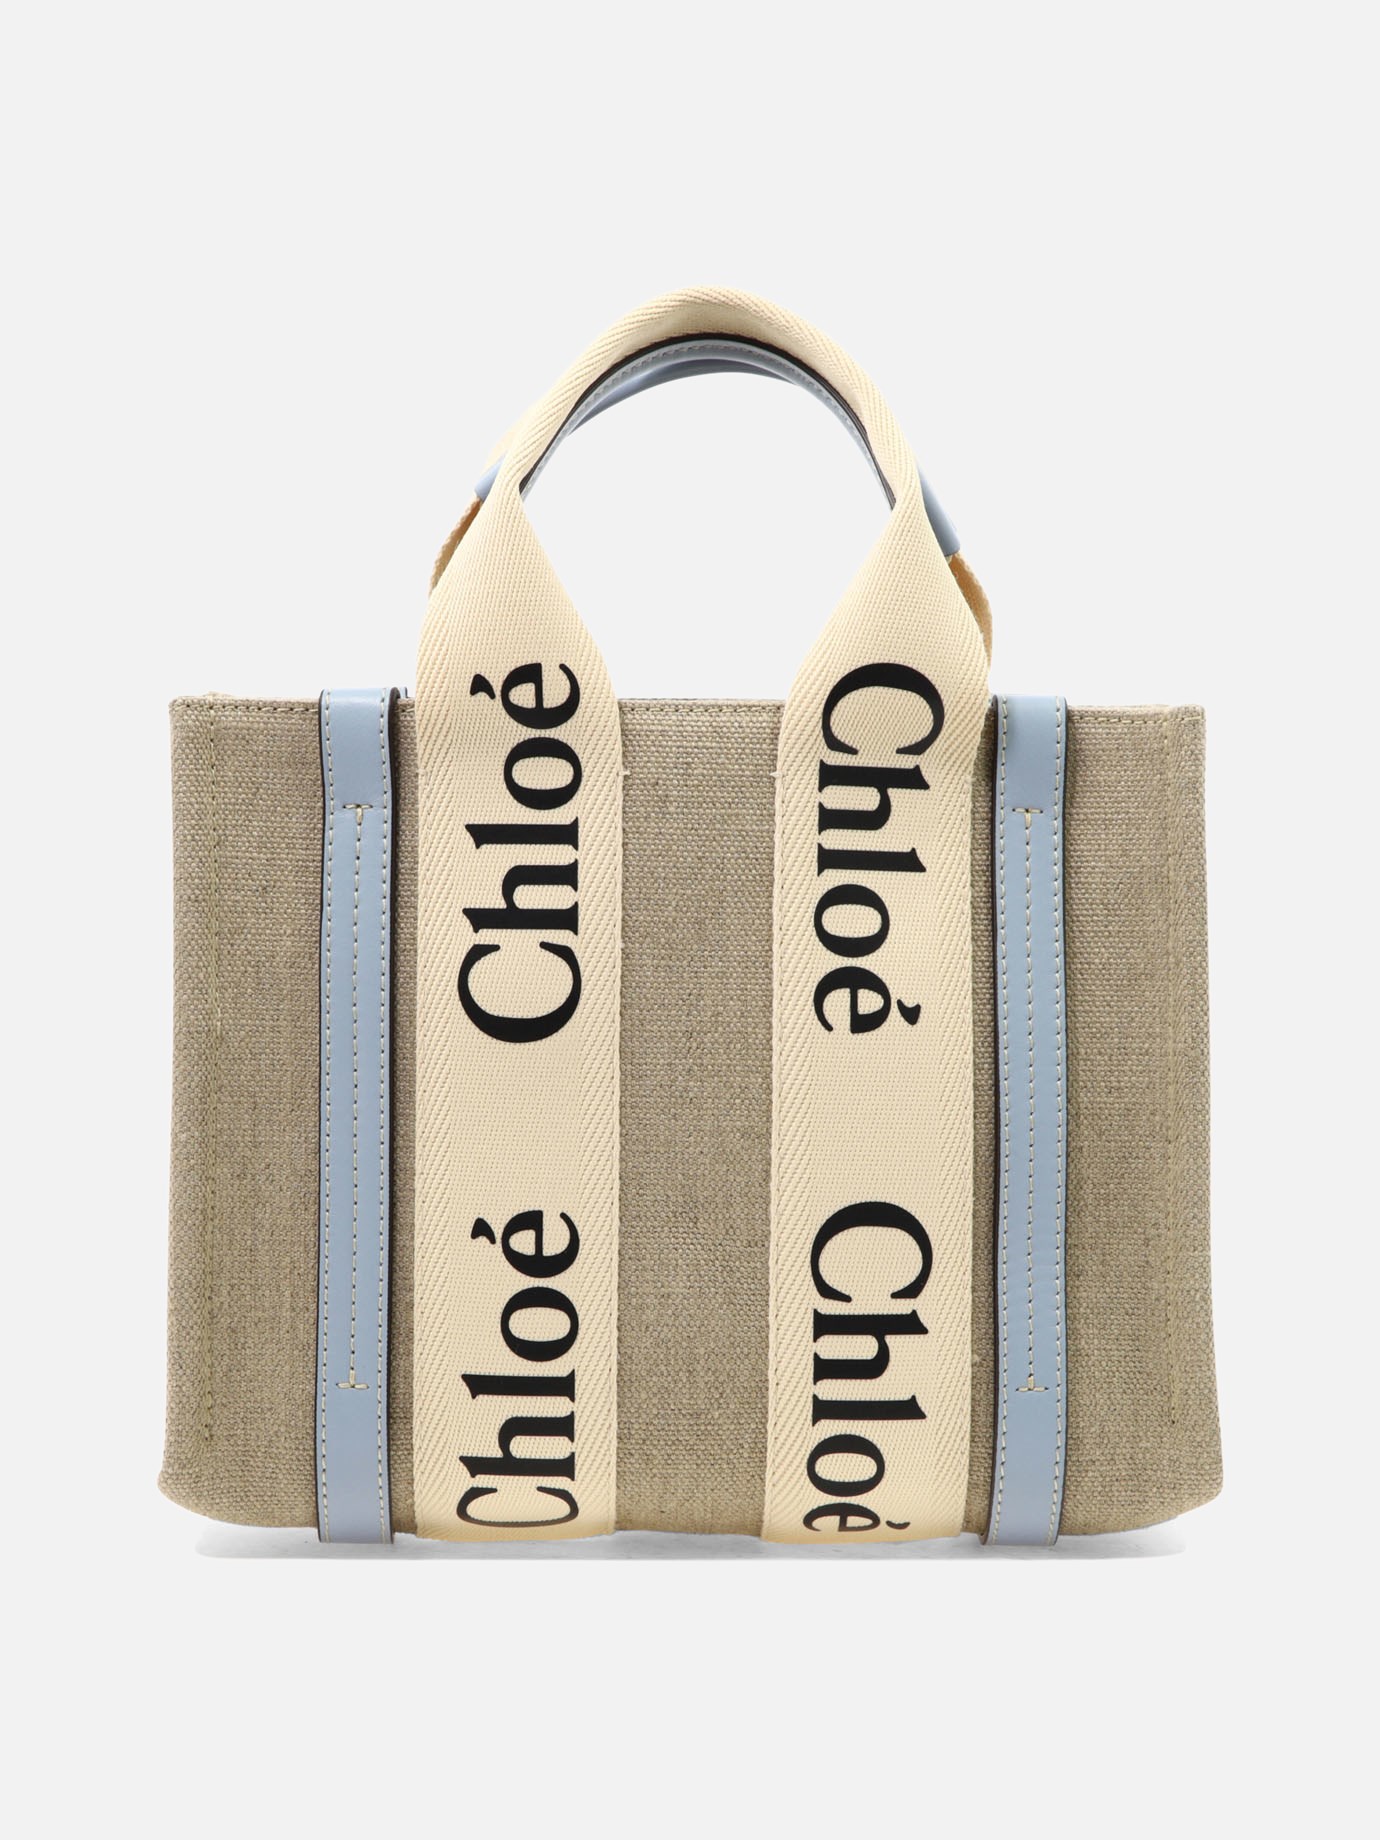  Woody Small handbagby Chloé - 1